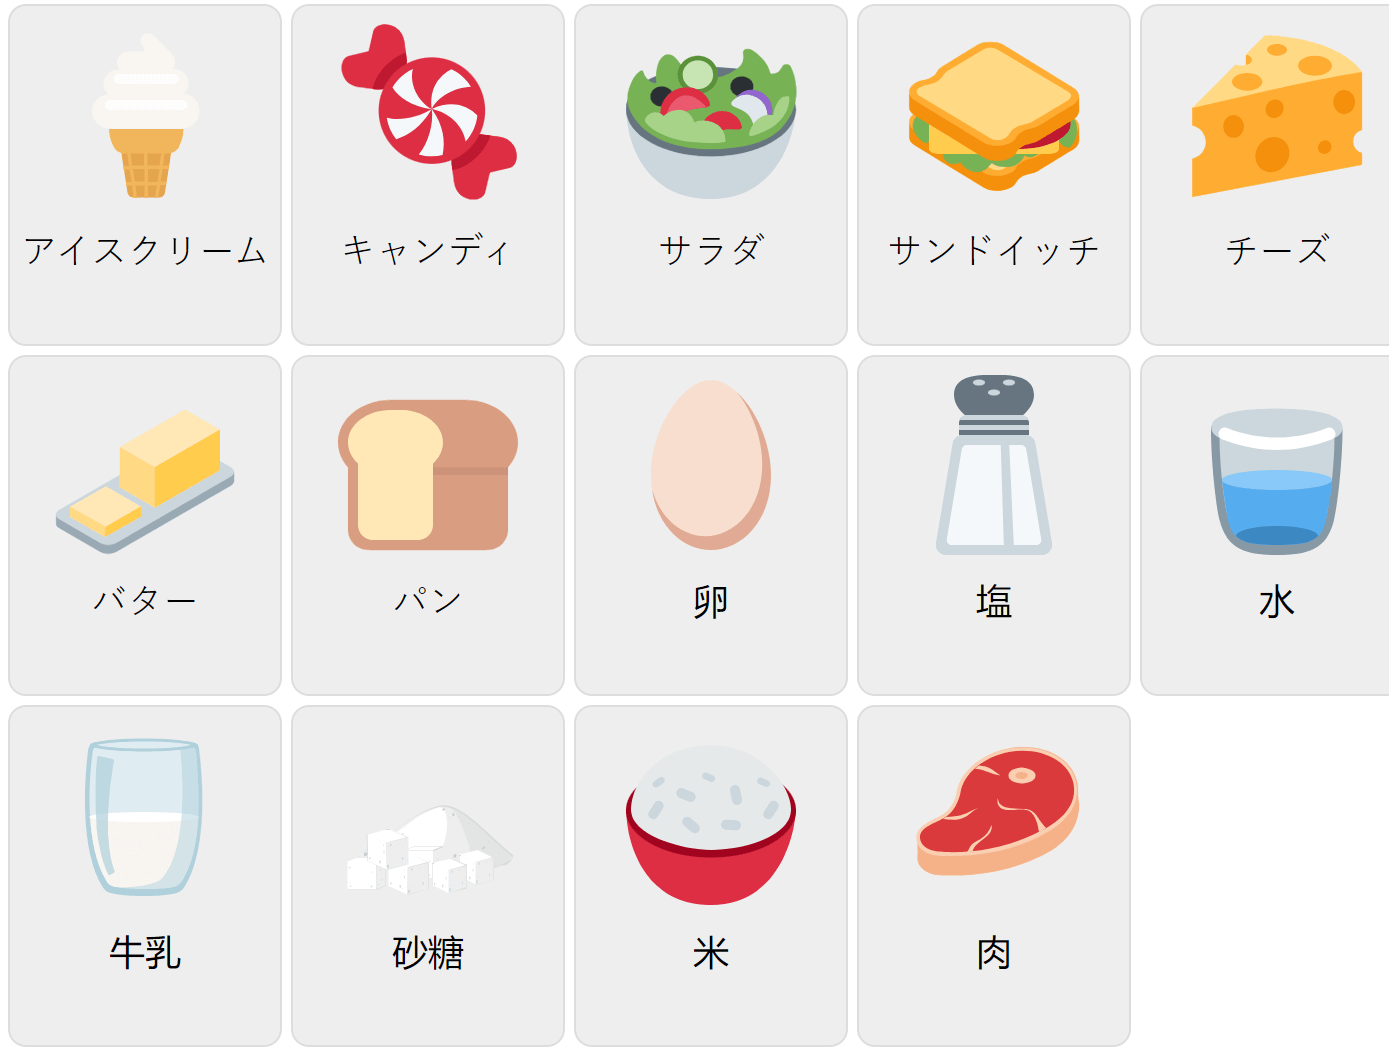 Еда на японском языке 1